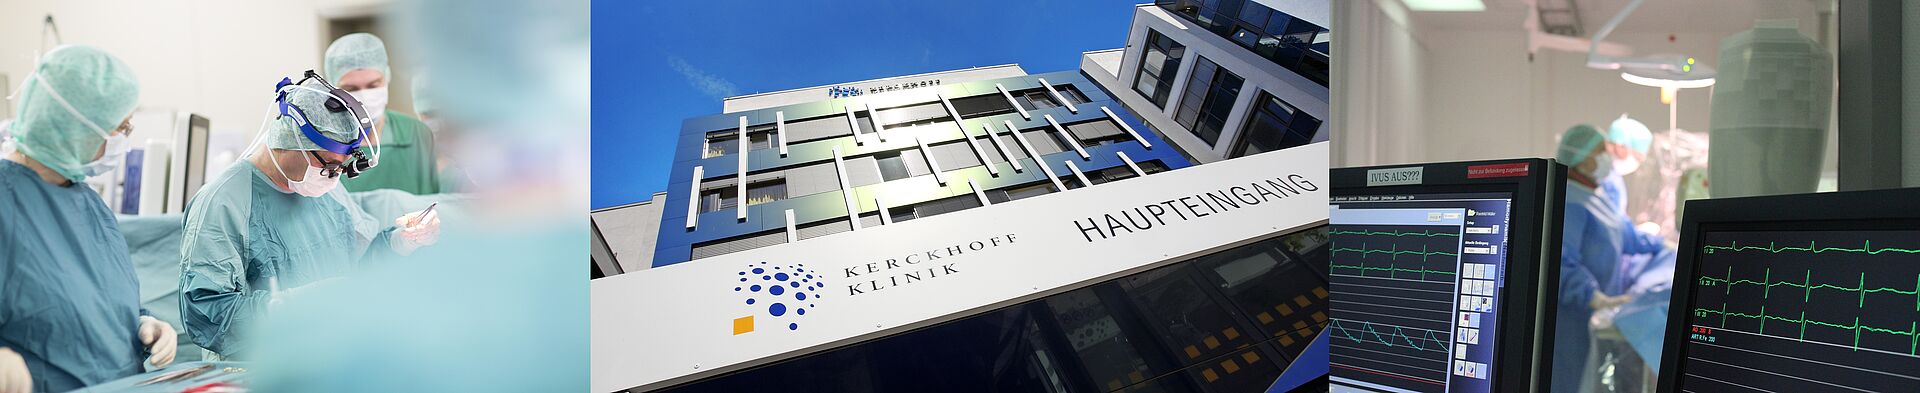 Kerckhoff-Klinik